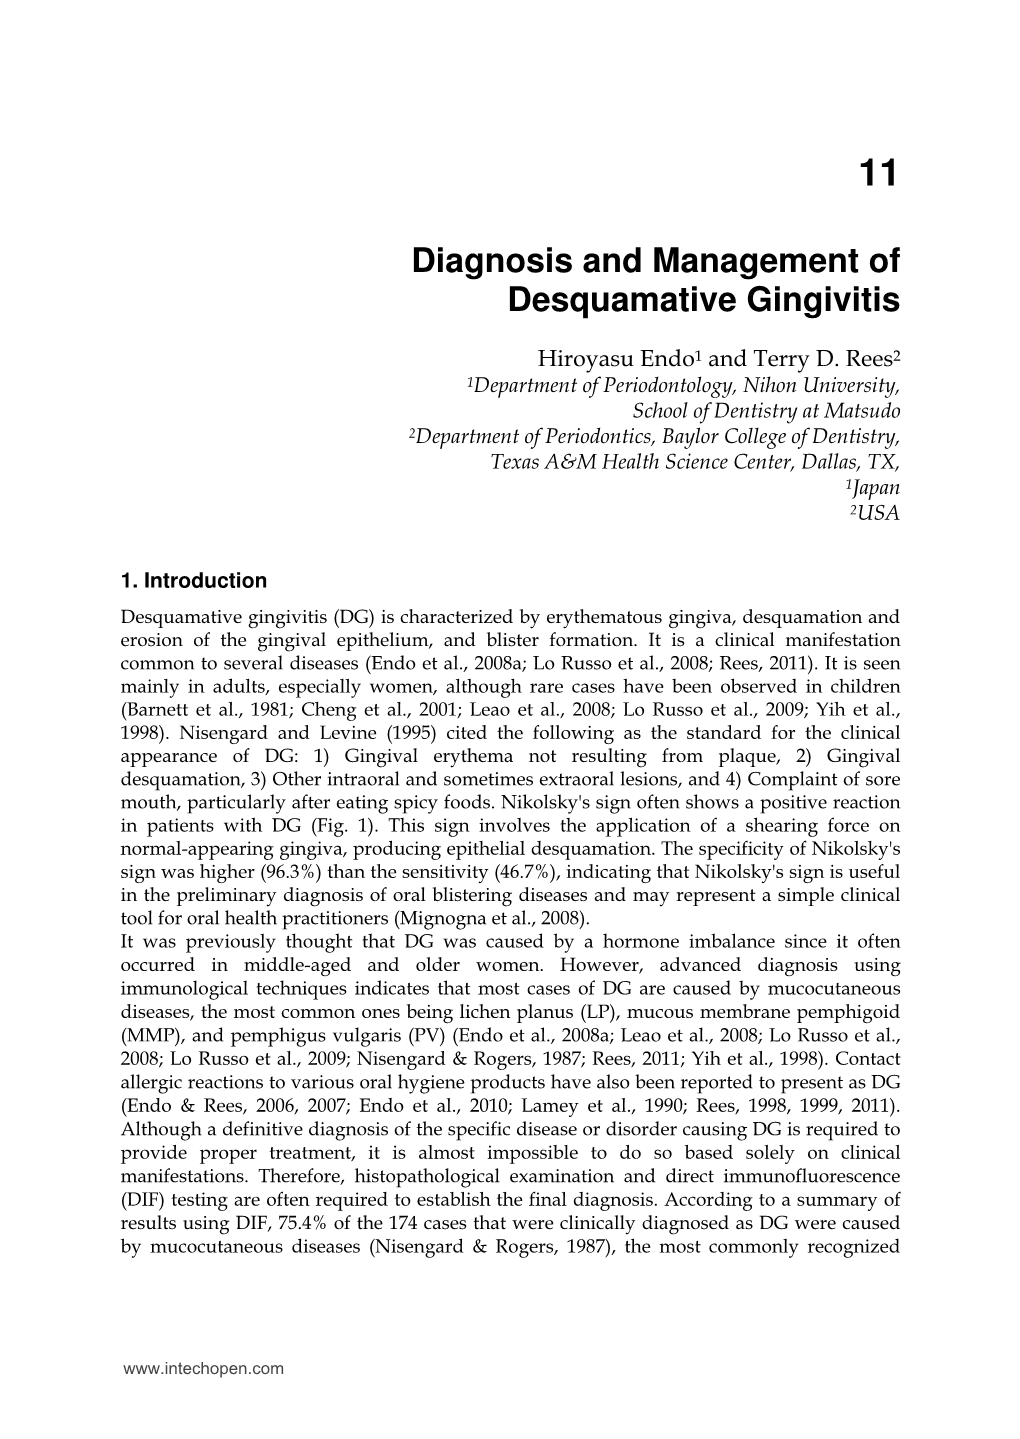 Diagnosis and Management of Desquamative Gingivitis